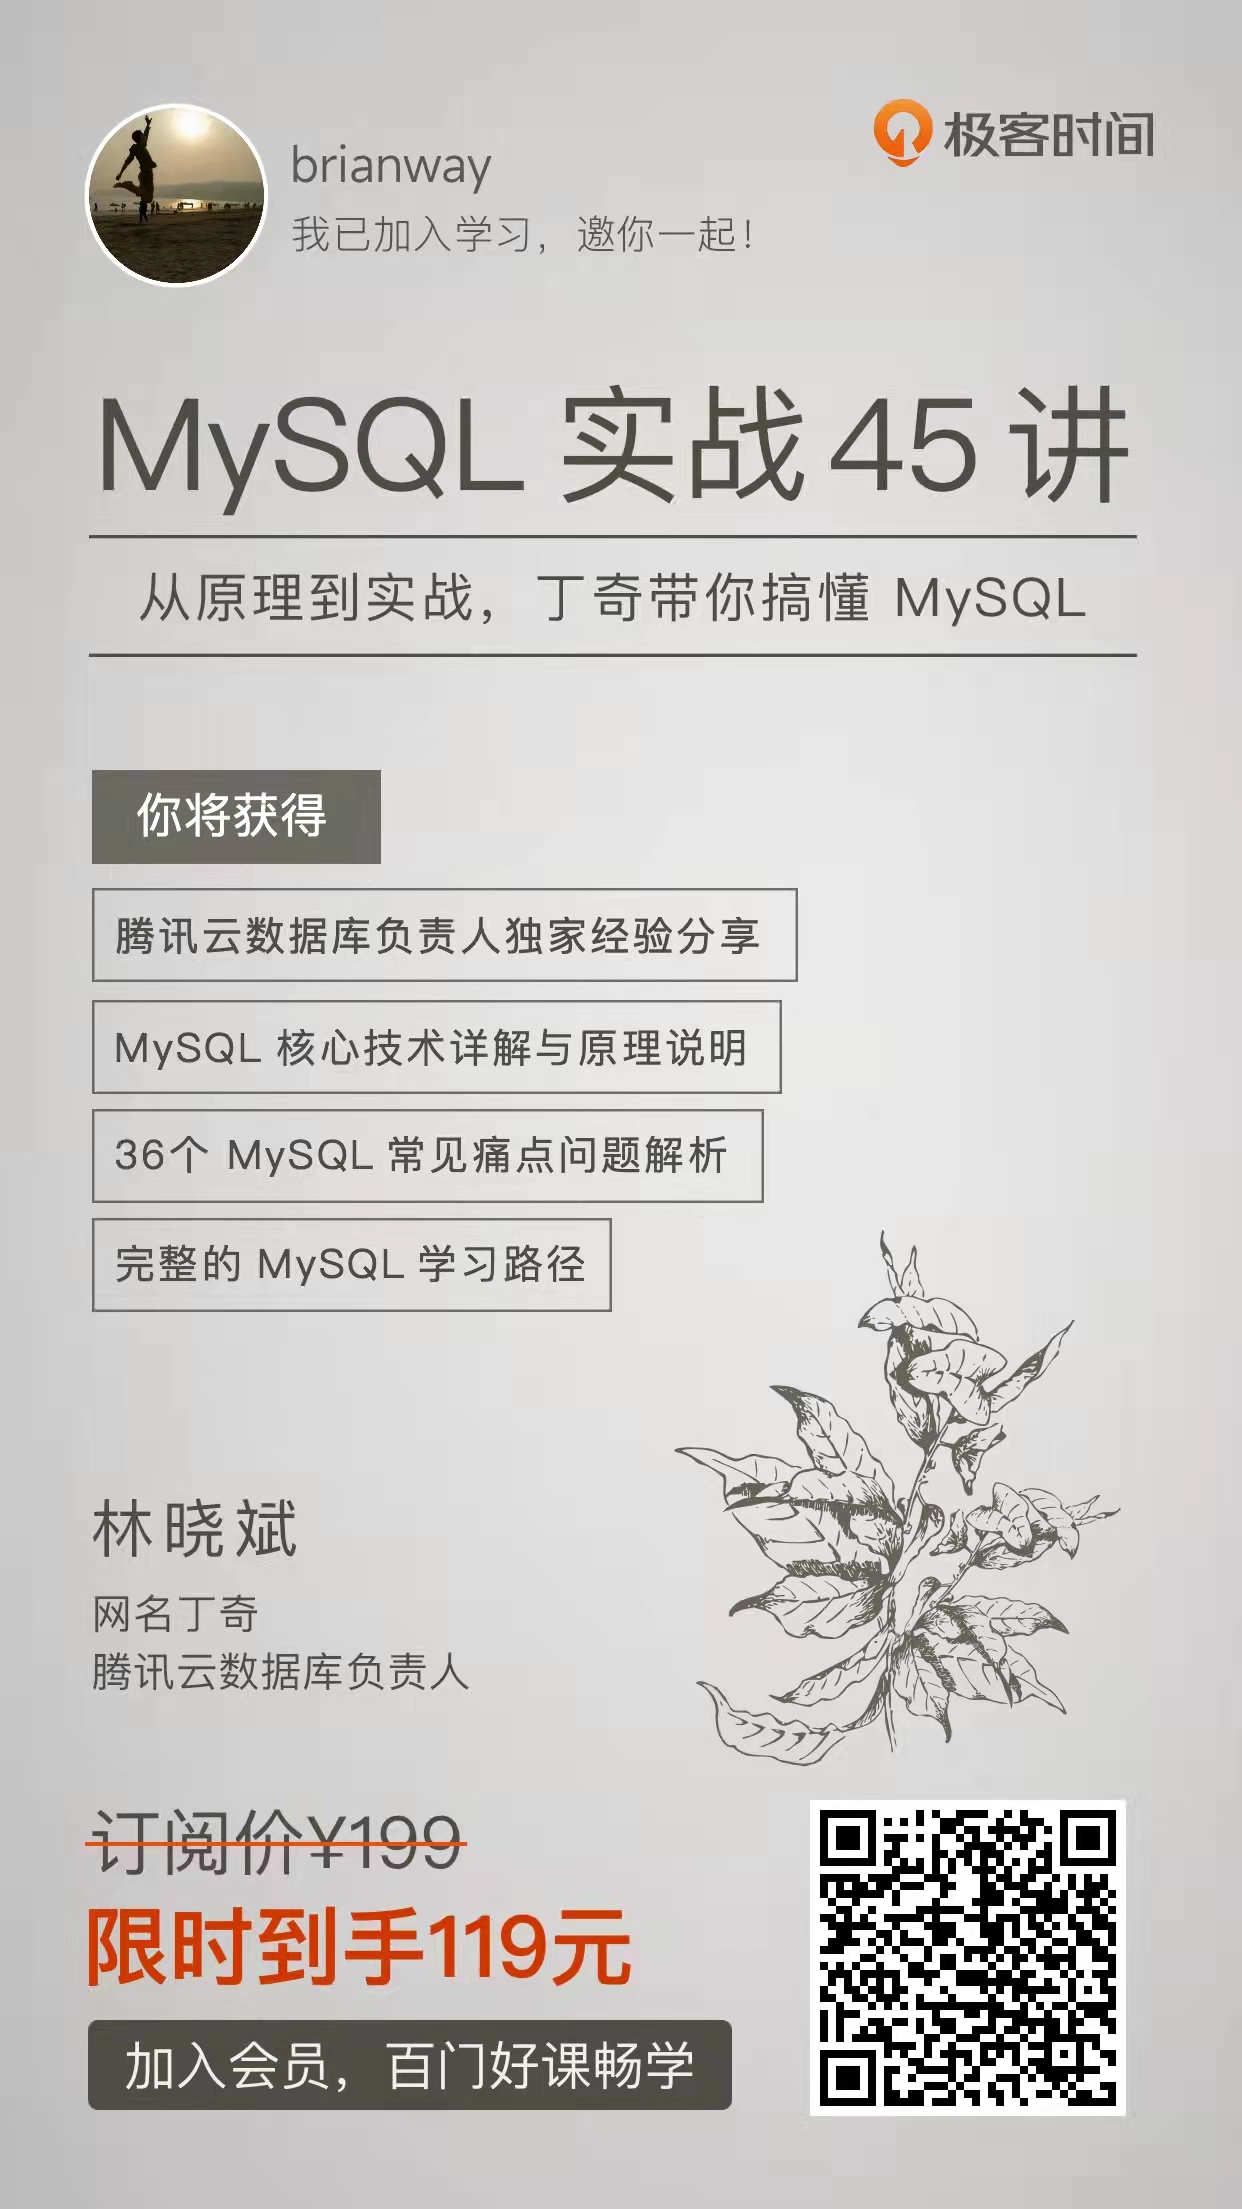 《MySQL实战45讲》- shared by brianway